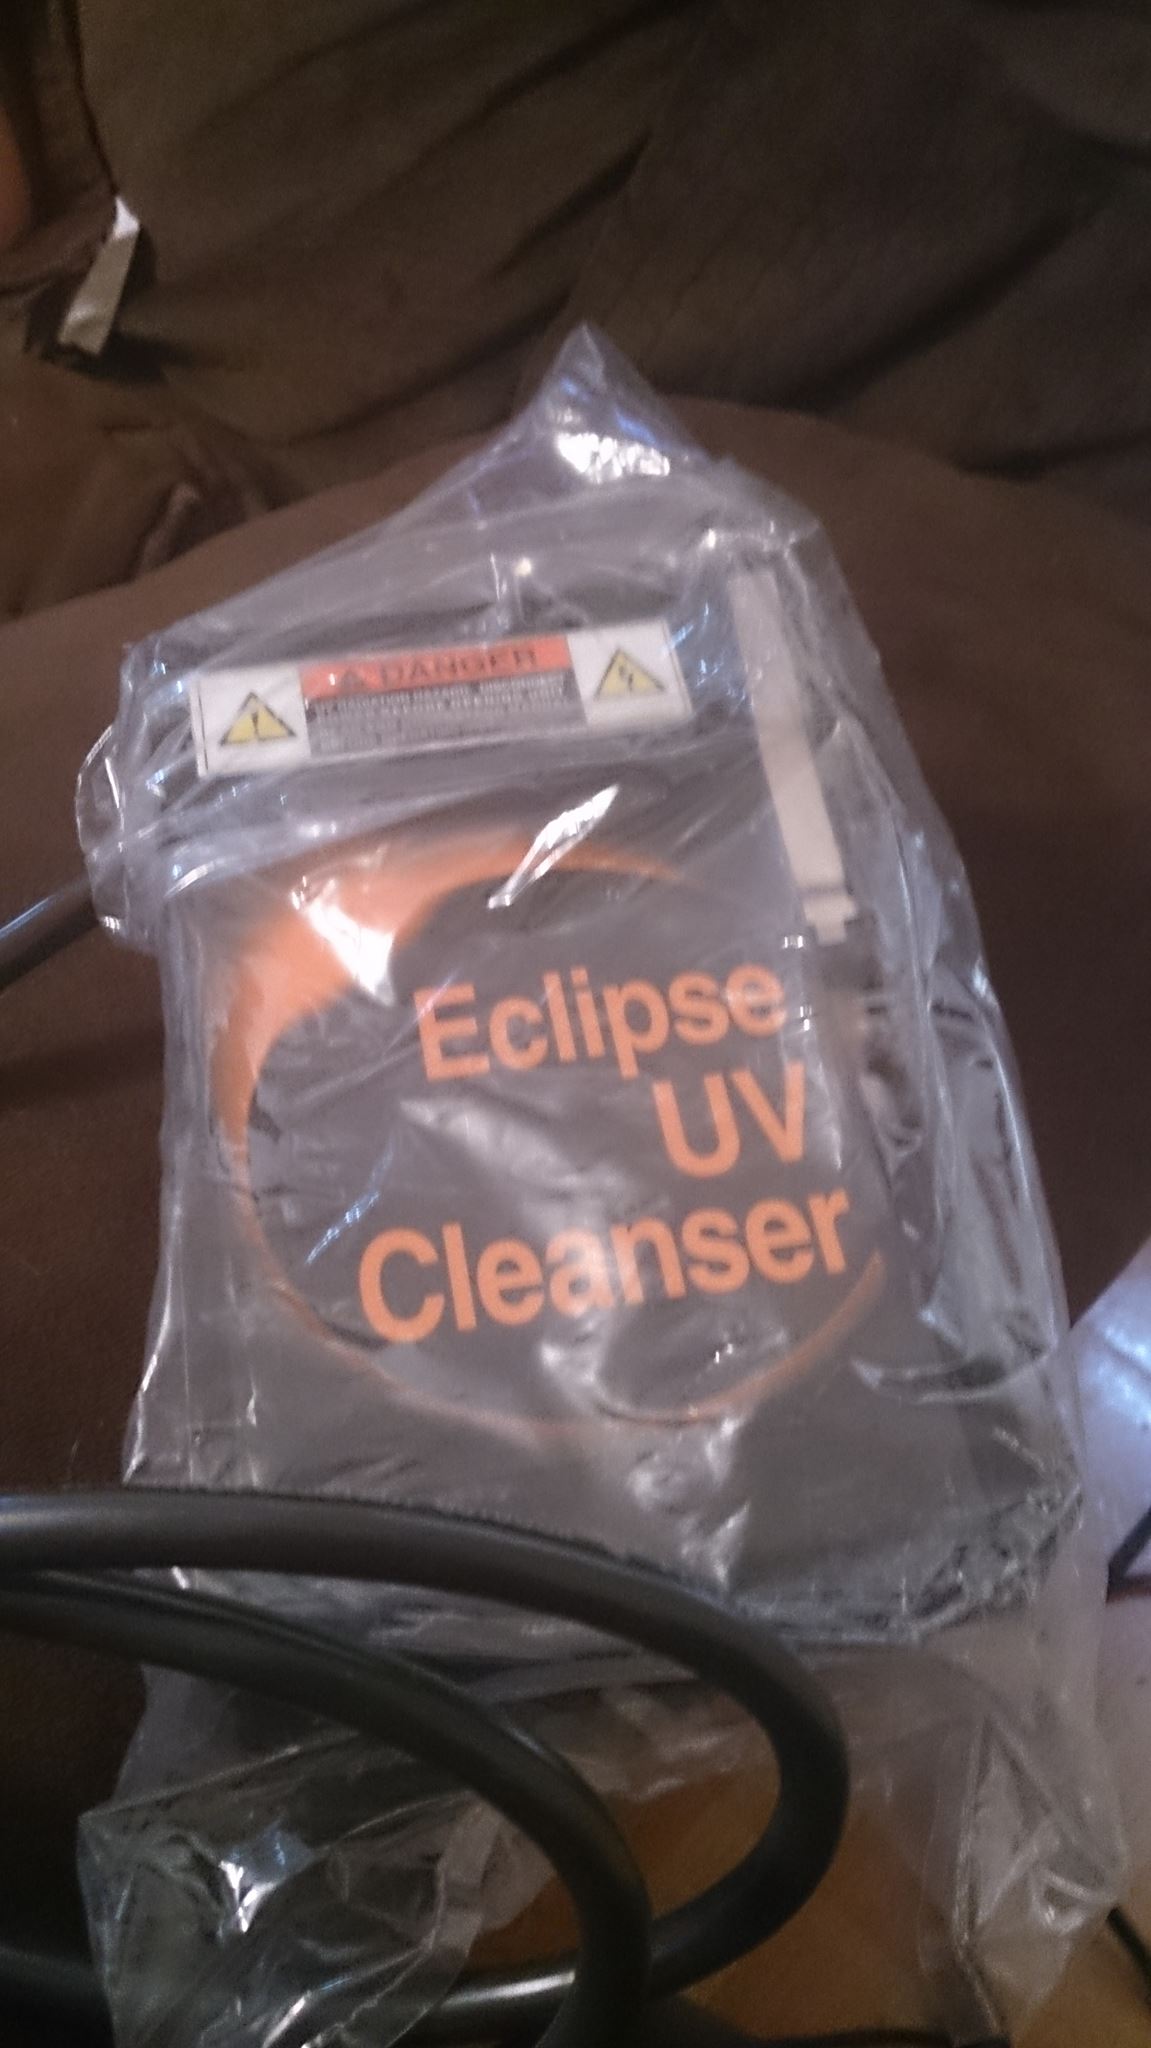 Eclipse uv cleanser